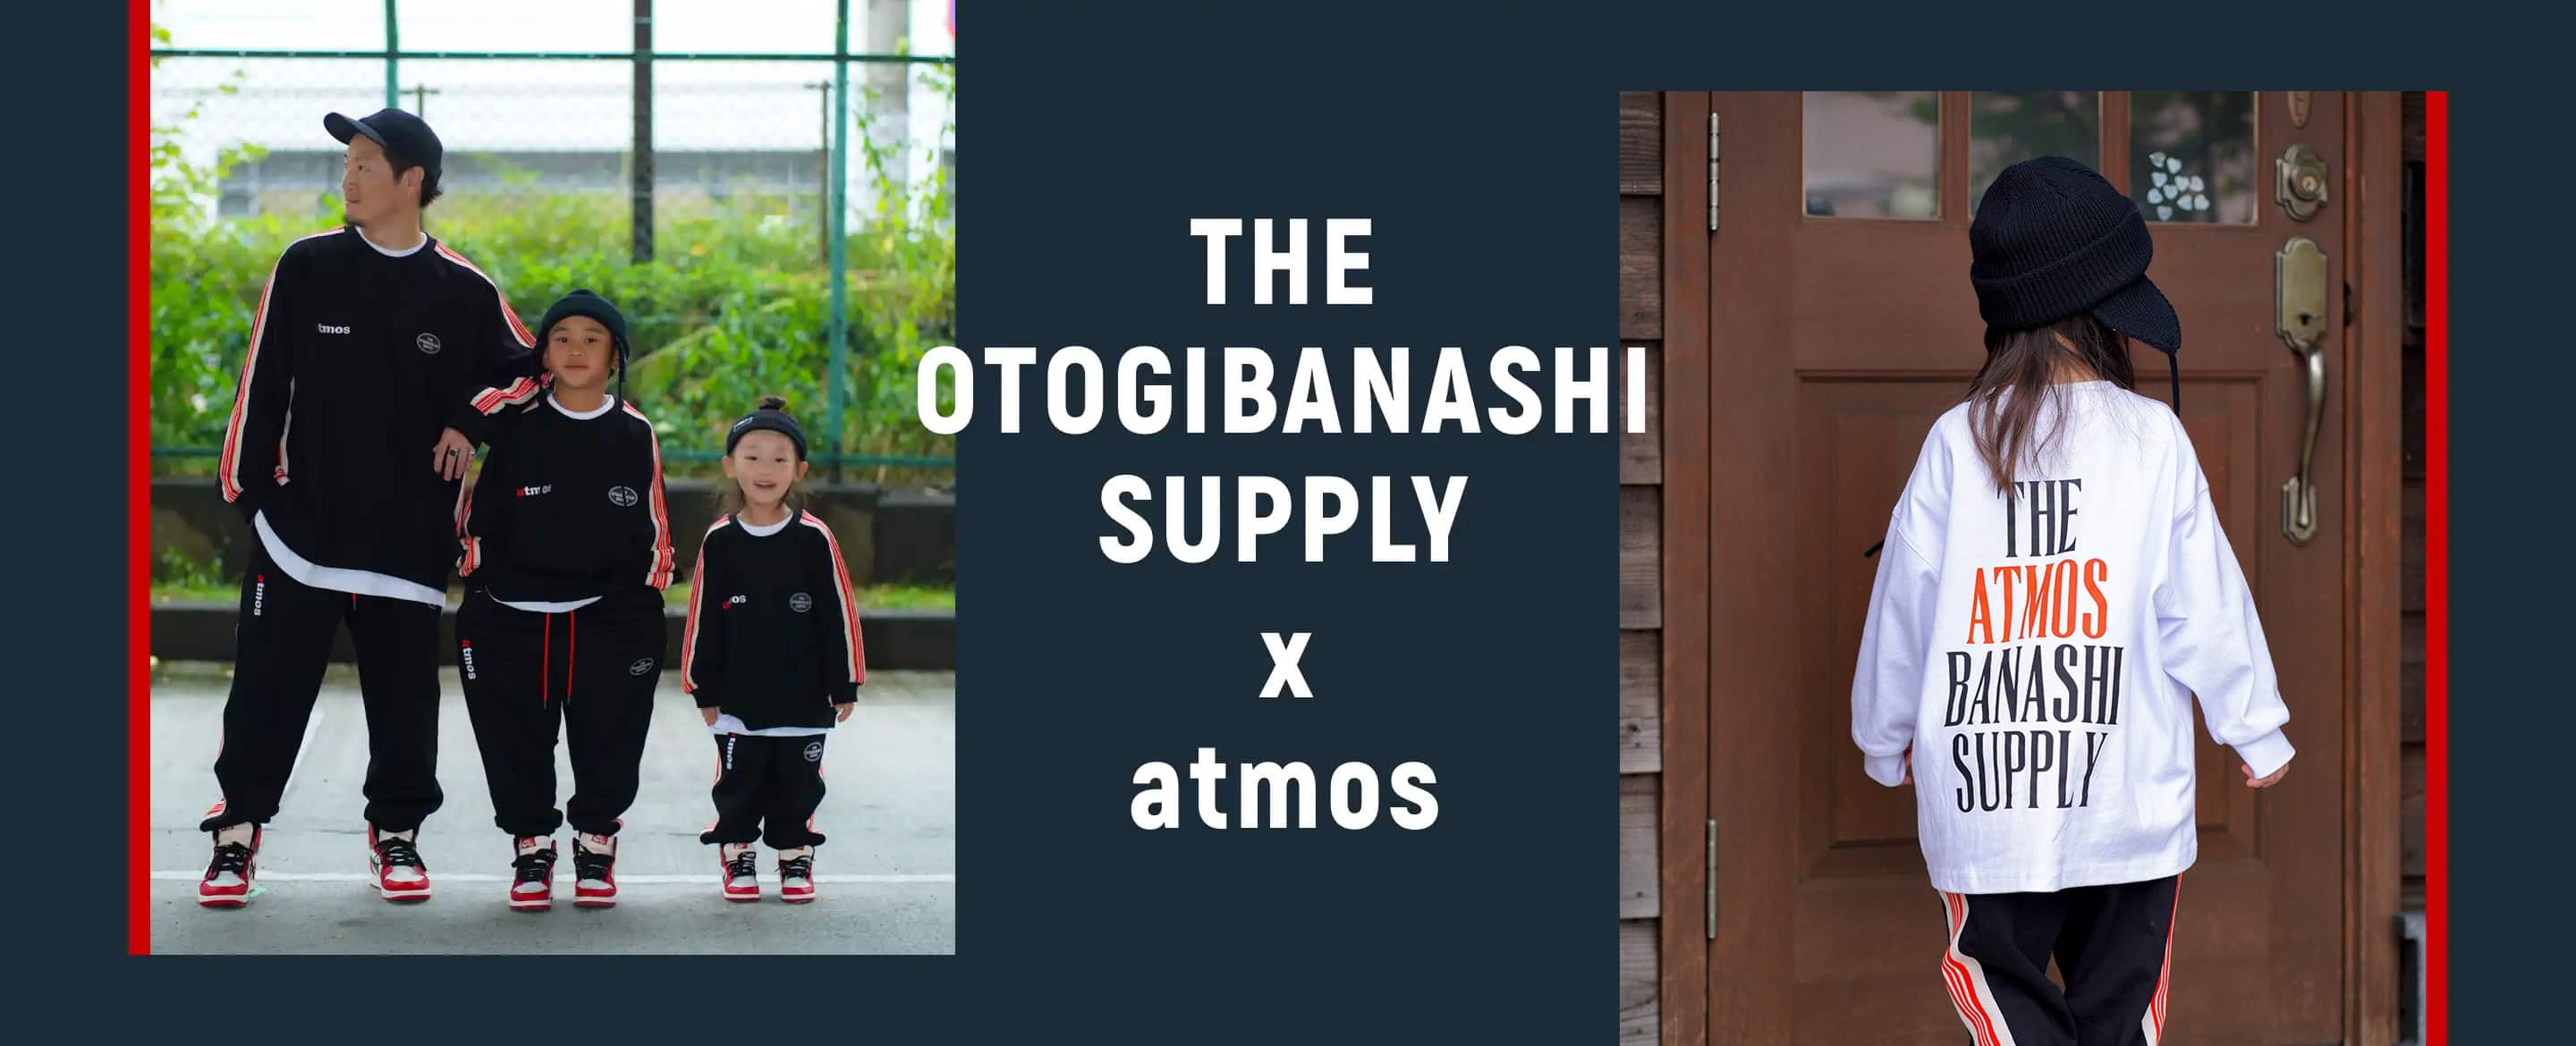 THE OTOGIBANASHI SUPPLY x atmos